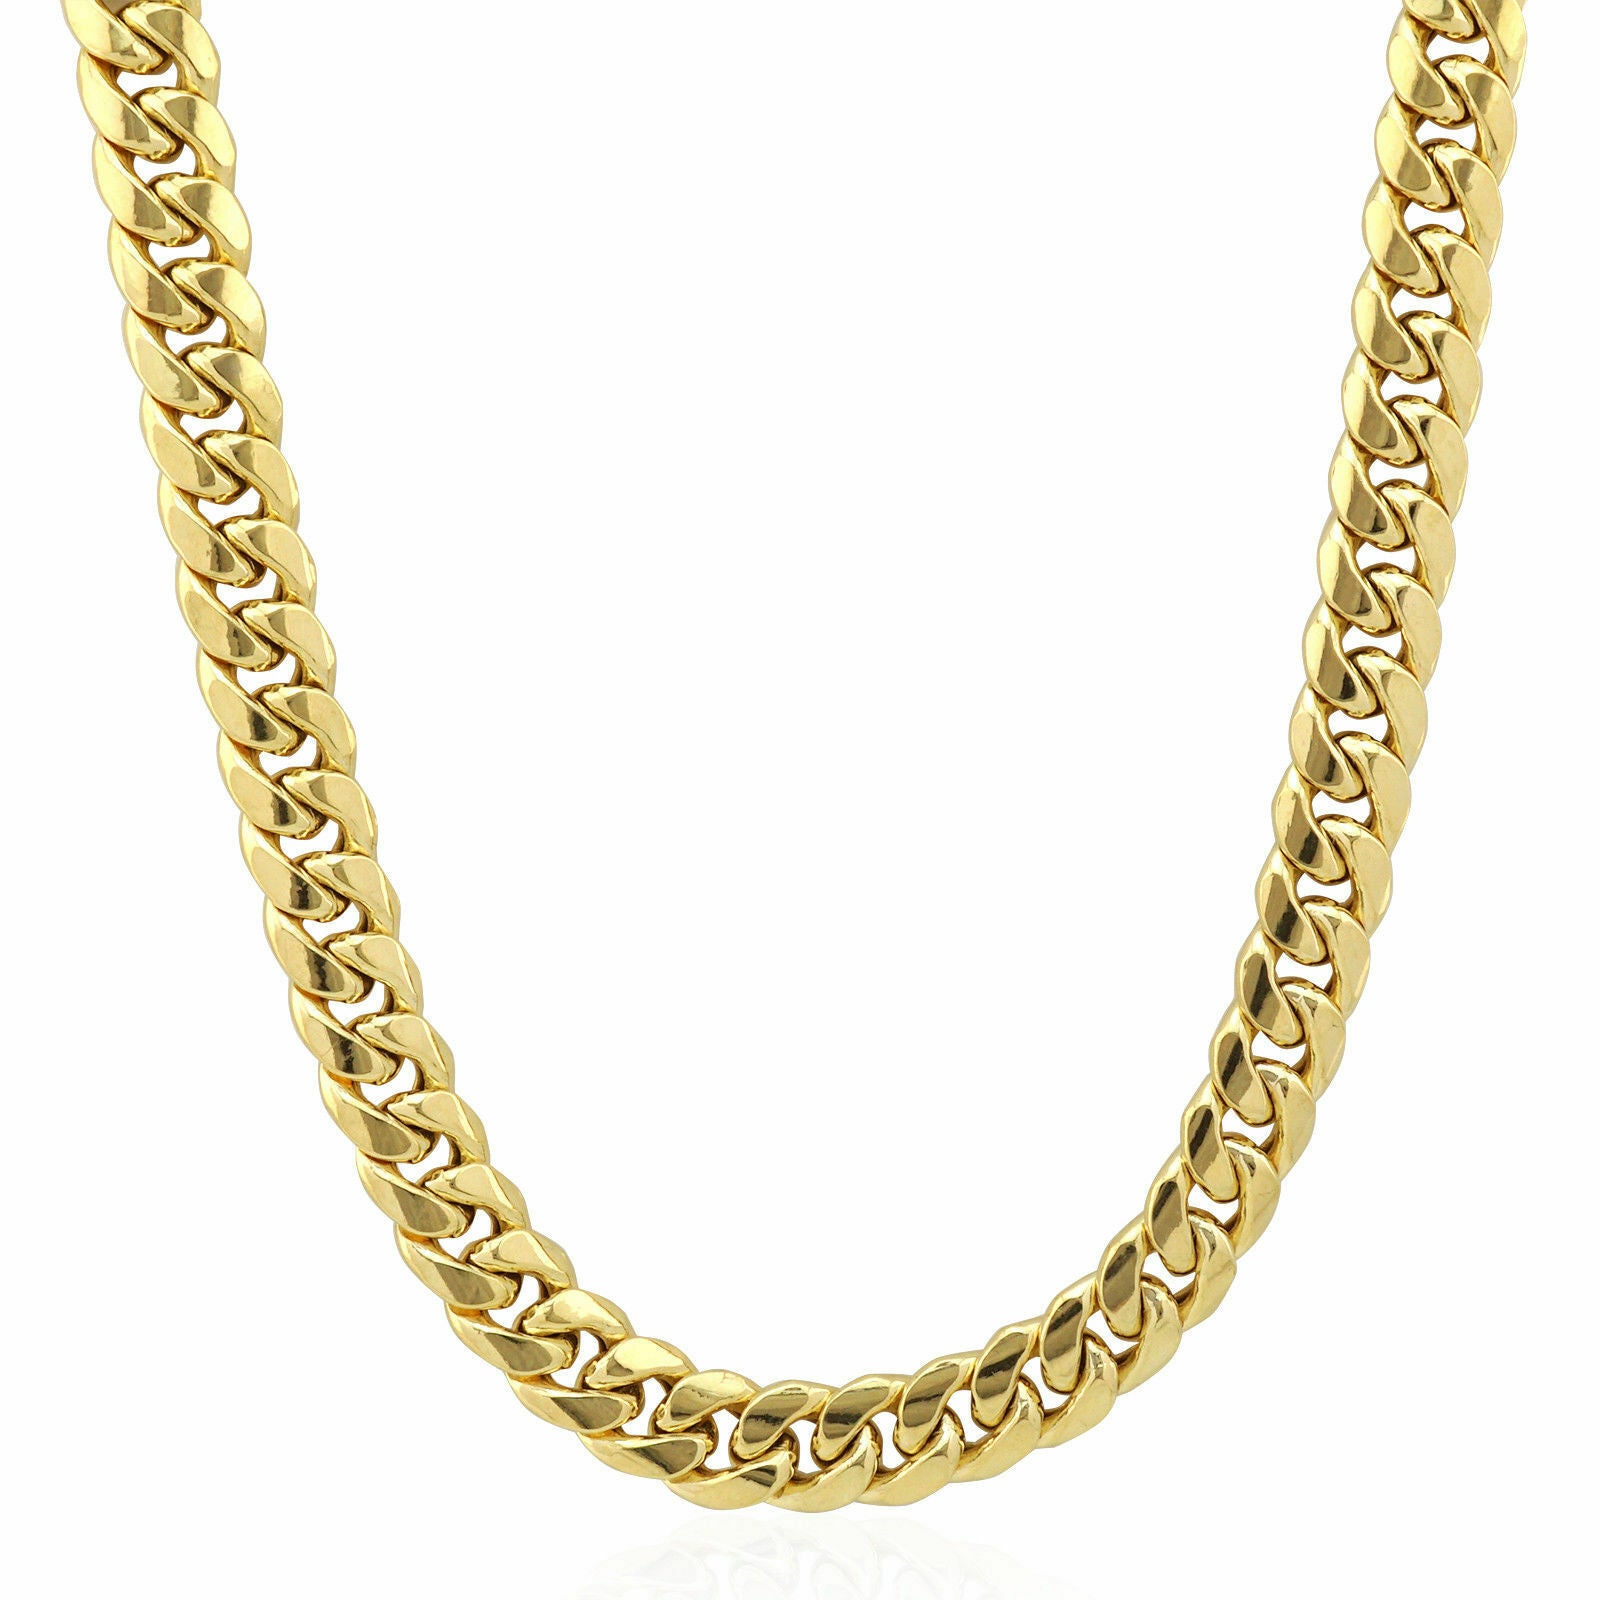 10K Gold Miami Cuban chain